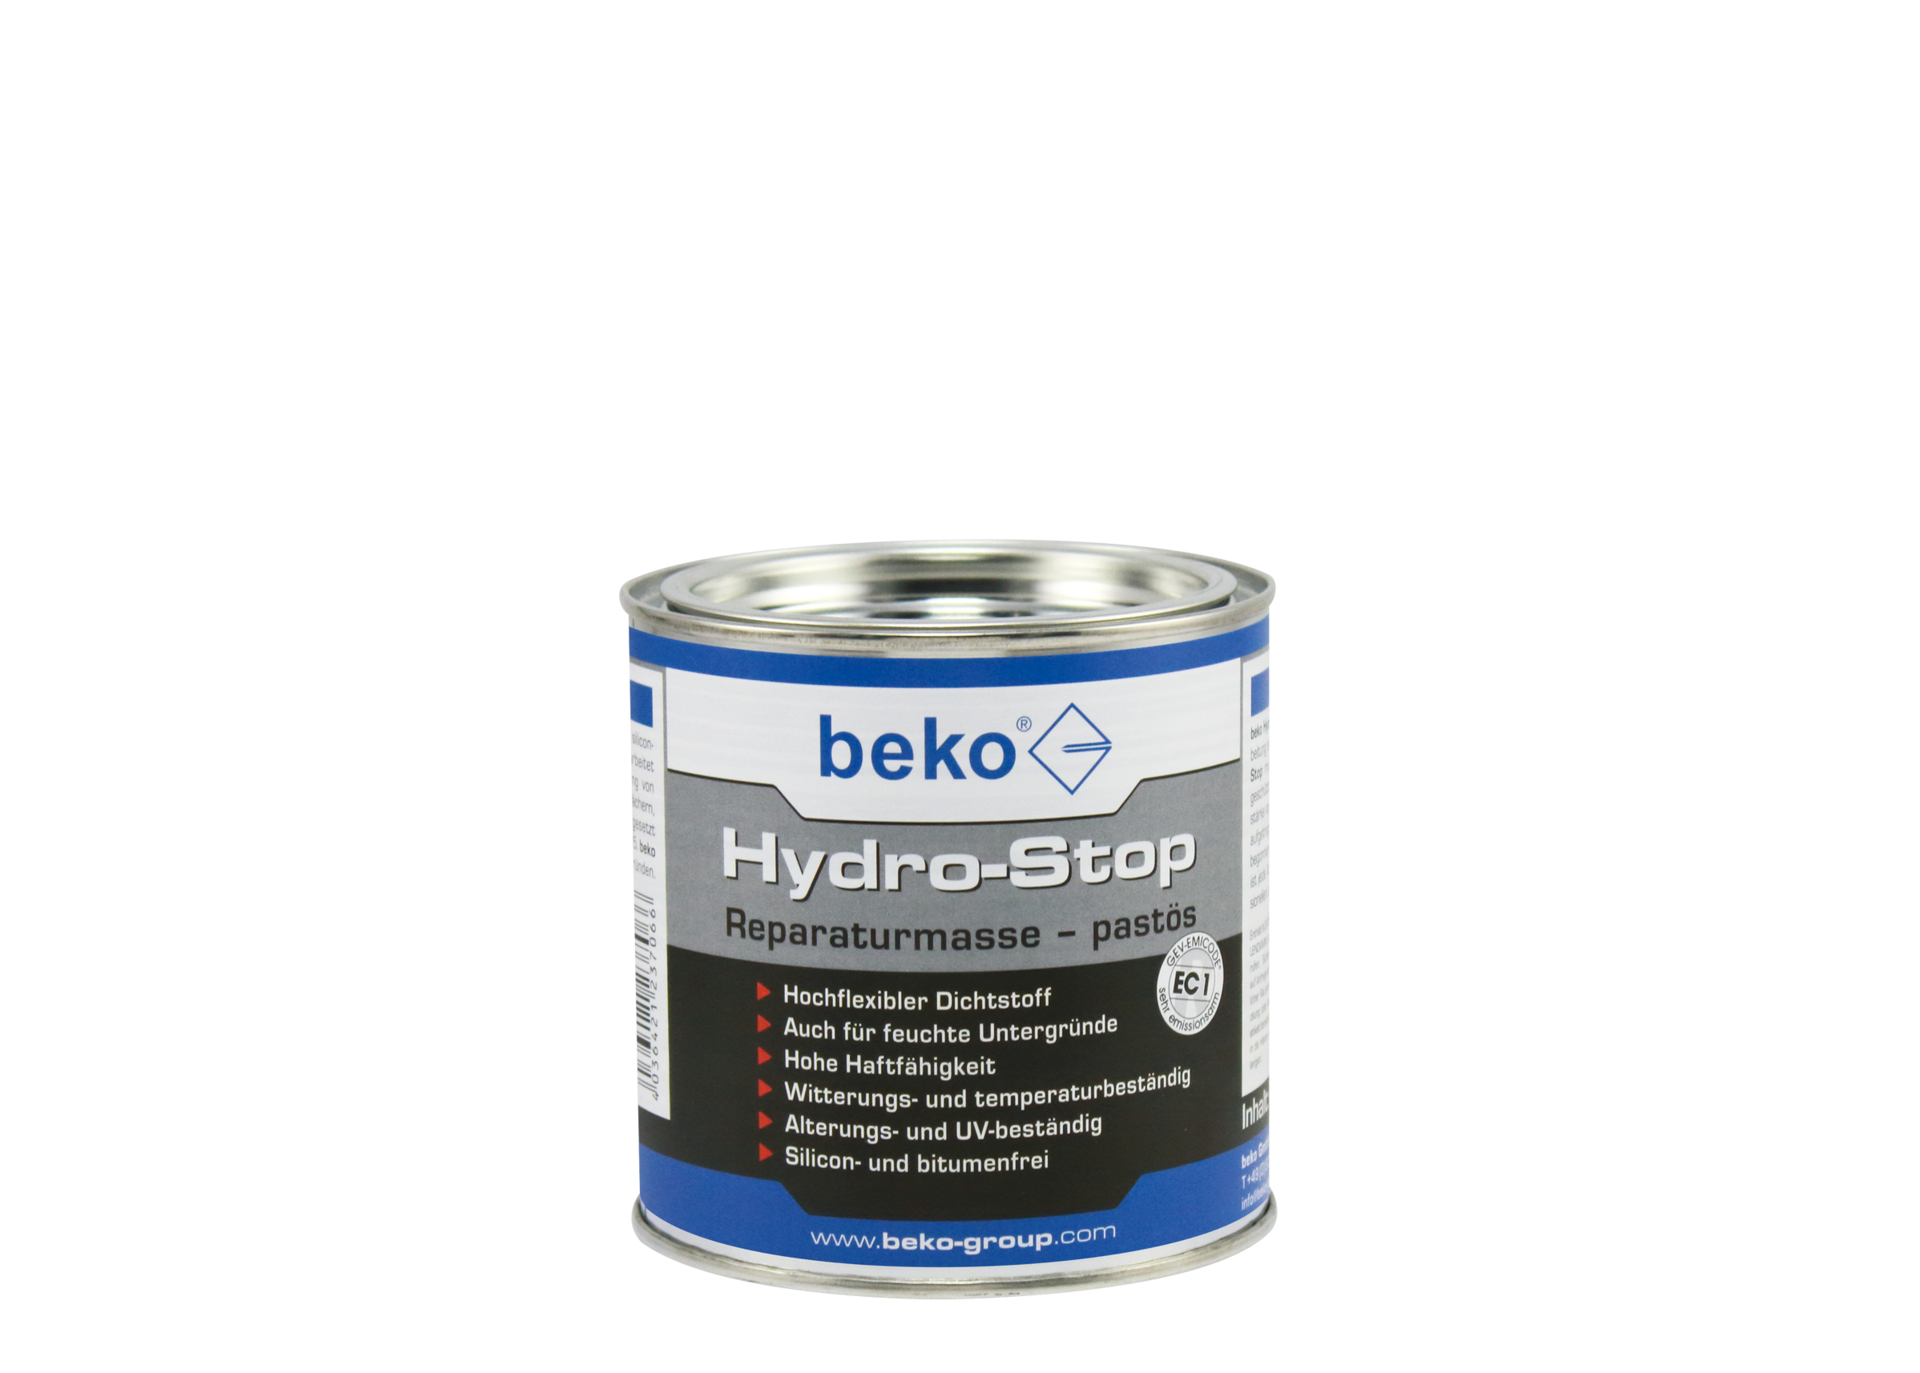 Beko Hydro-Stop Reparaturmasse pastös 1kg Dose